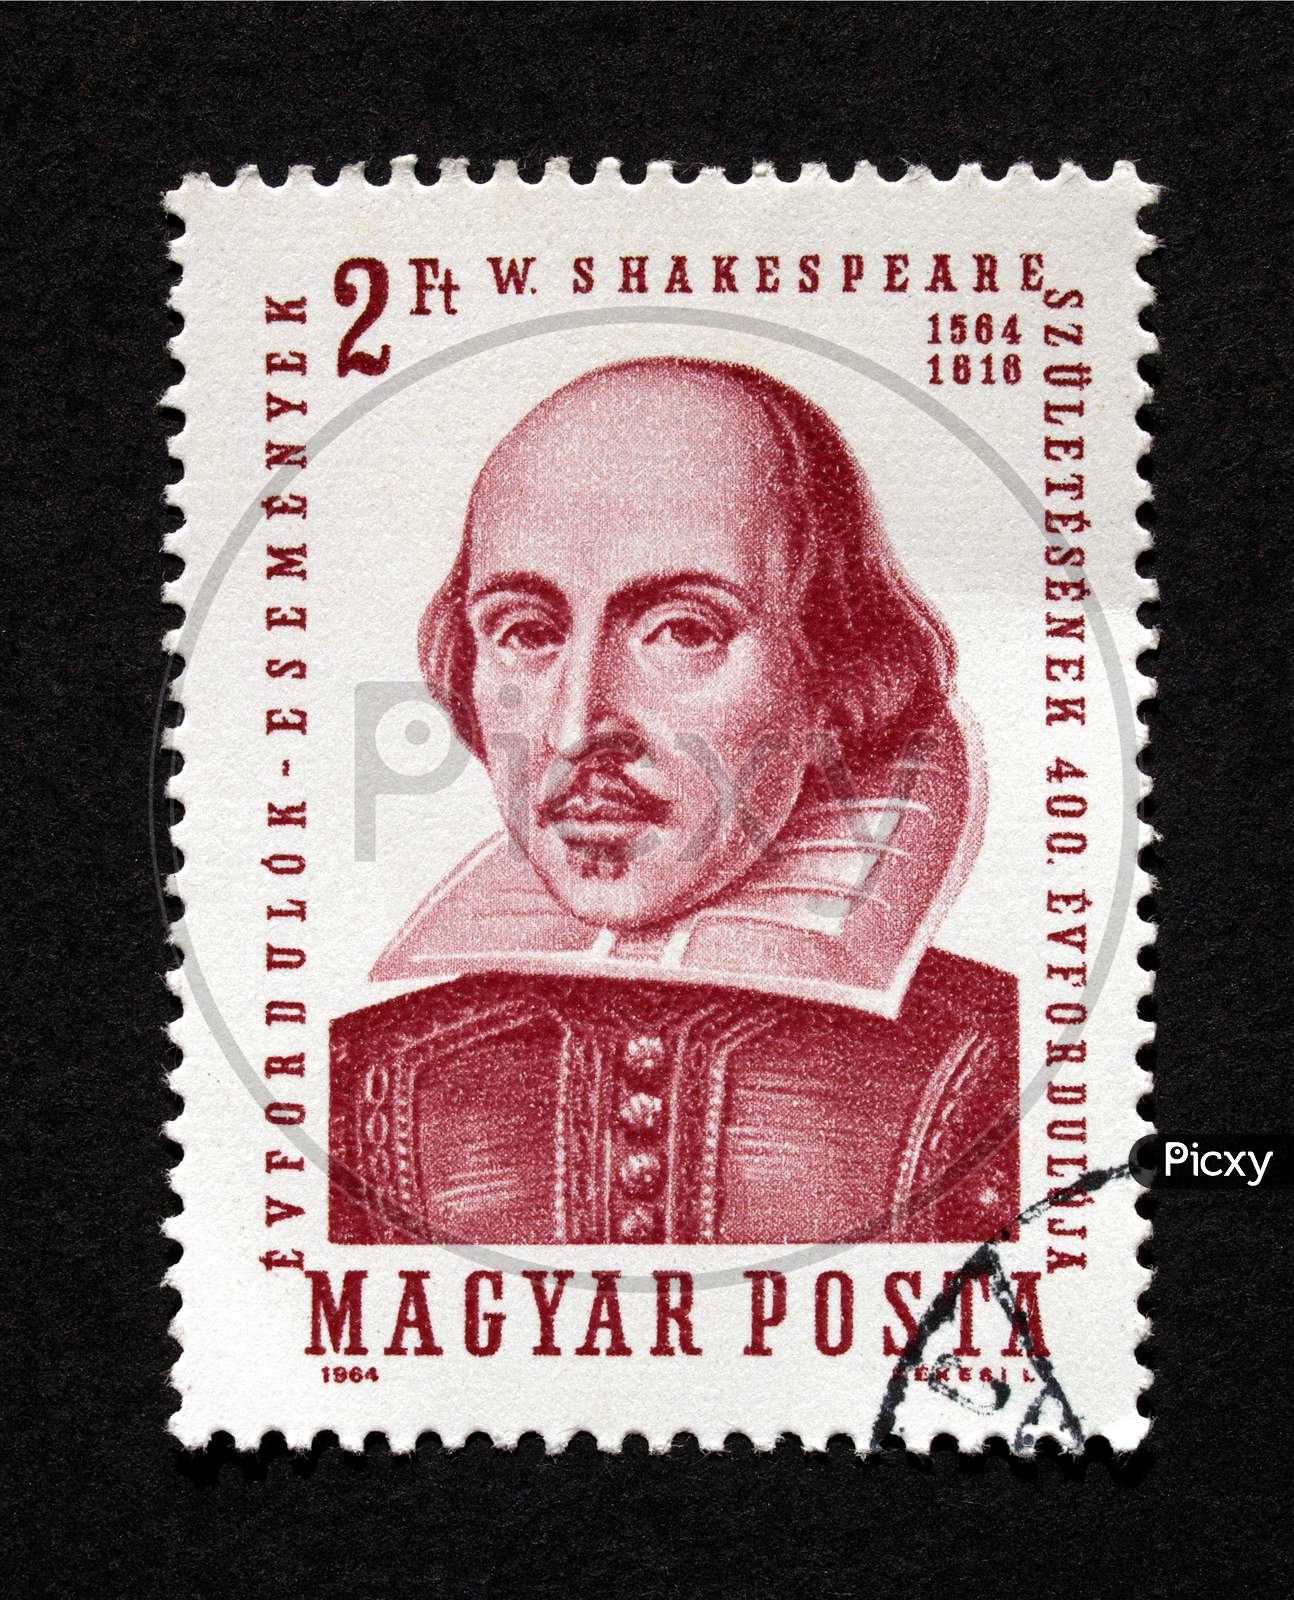 Hungary Circa 1964 - Shakespeare Stamp, Hungary, Circa 1964